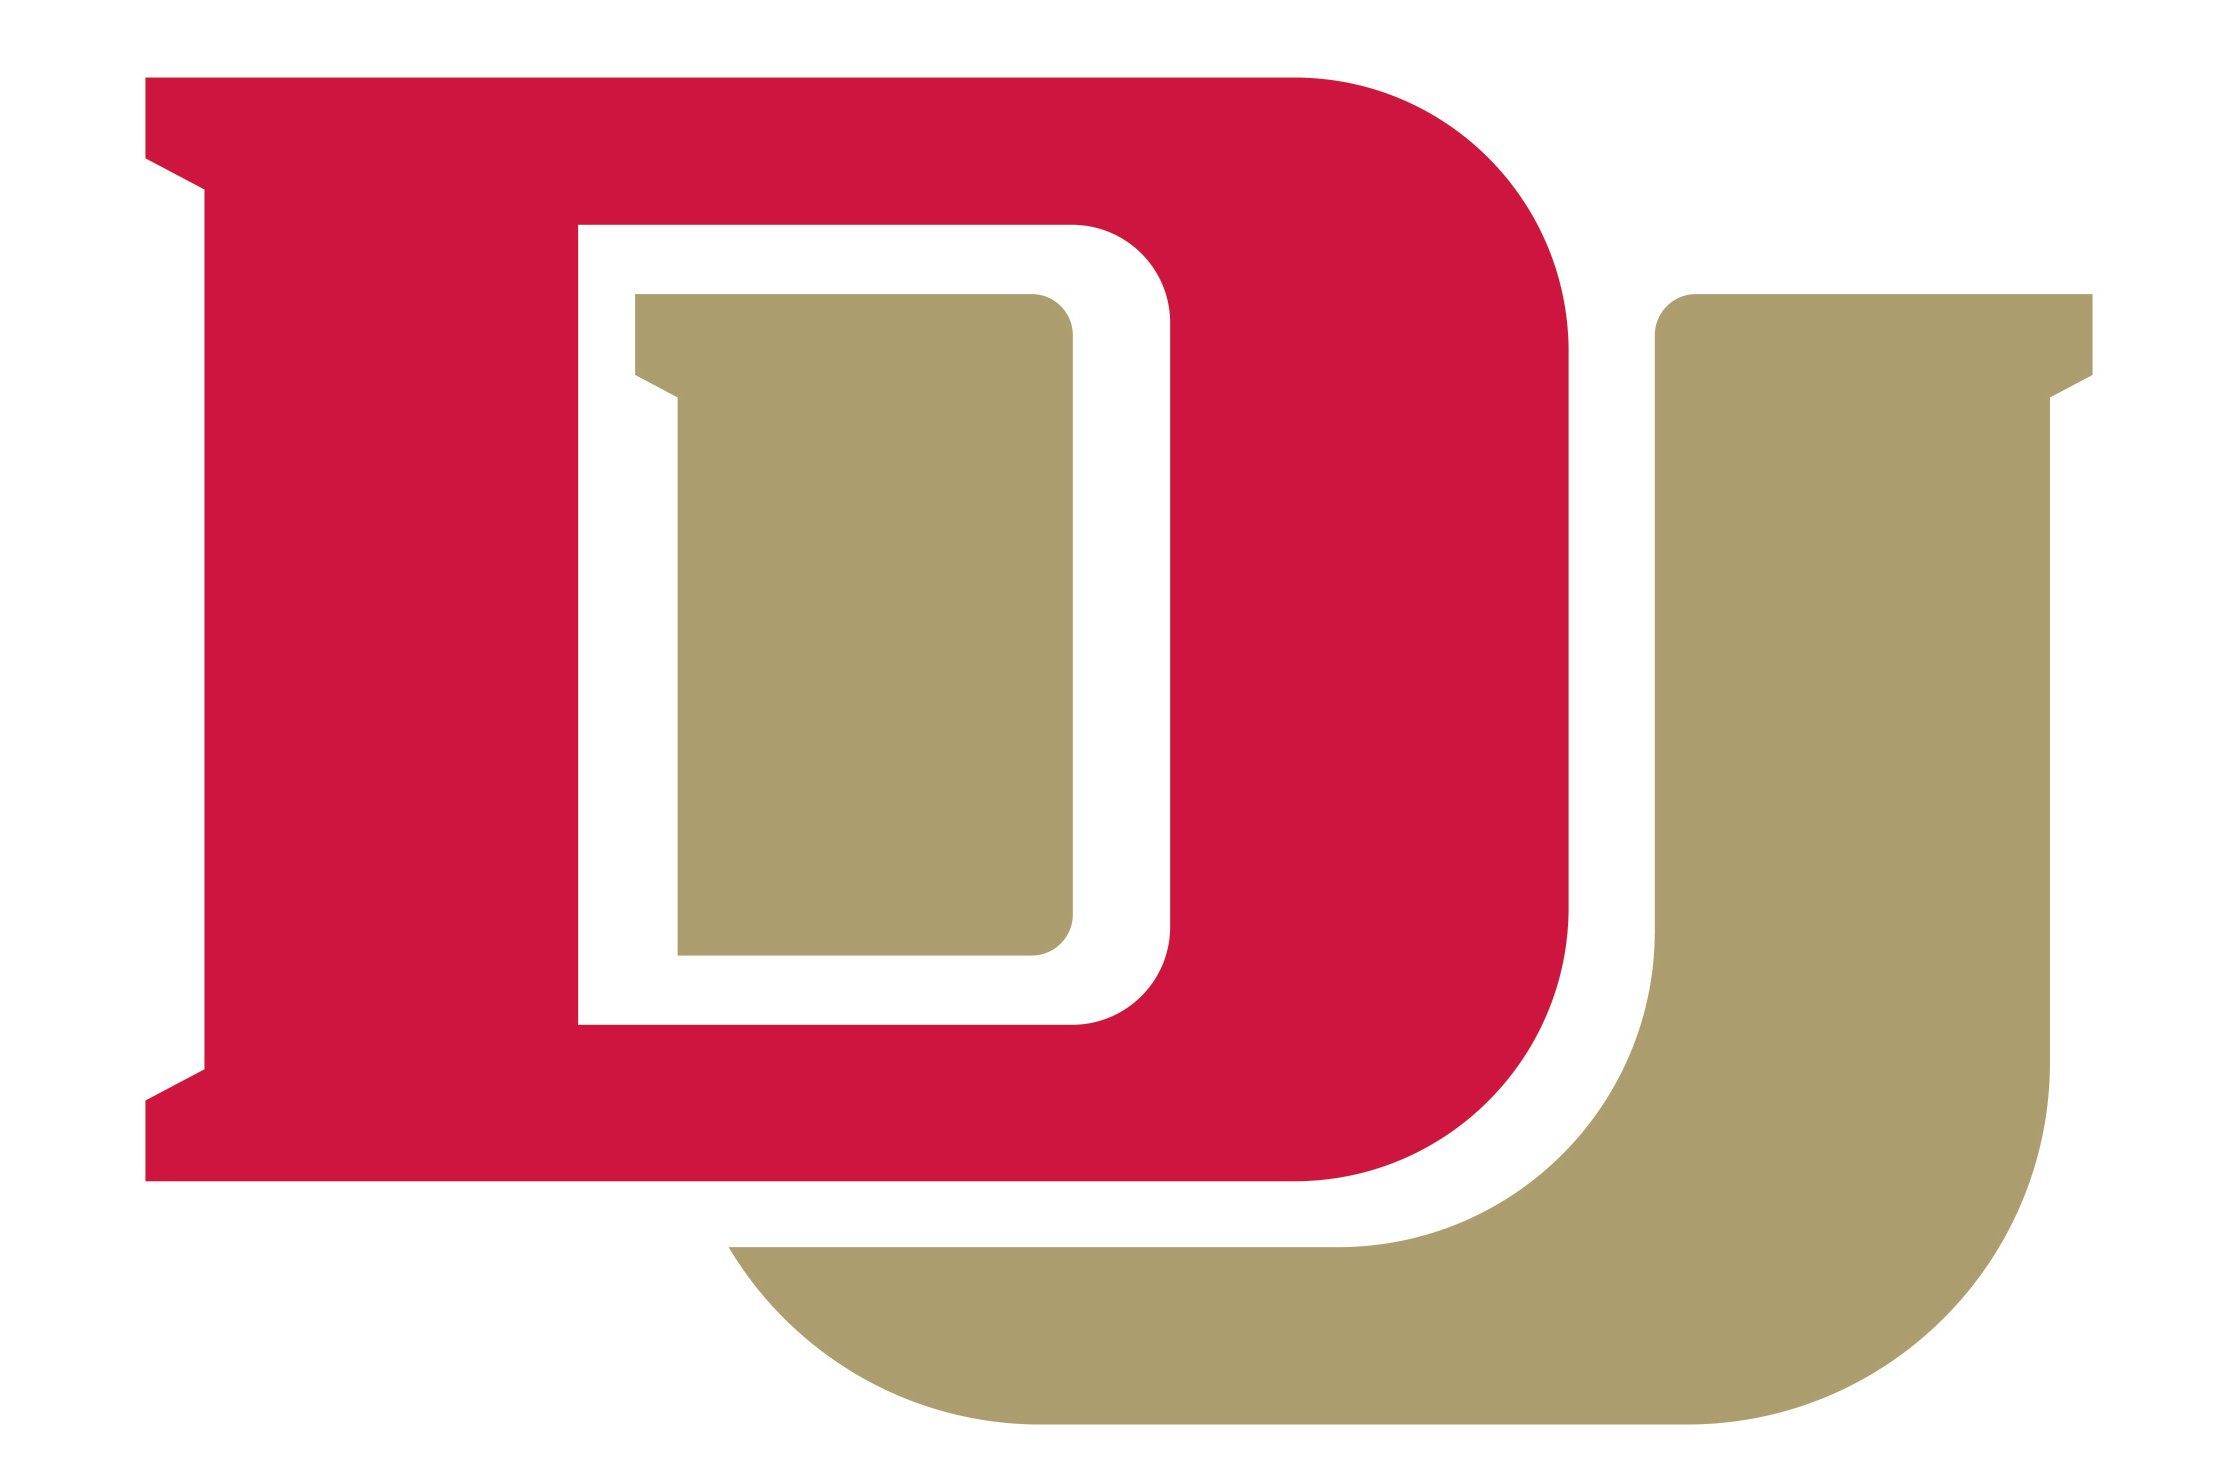 Interlocking D and U for University of Denver logo